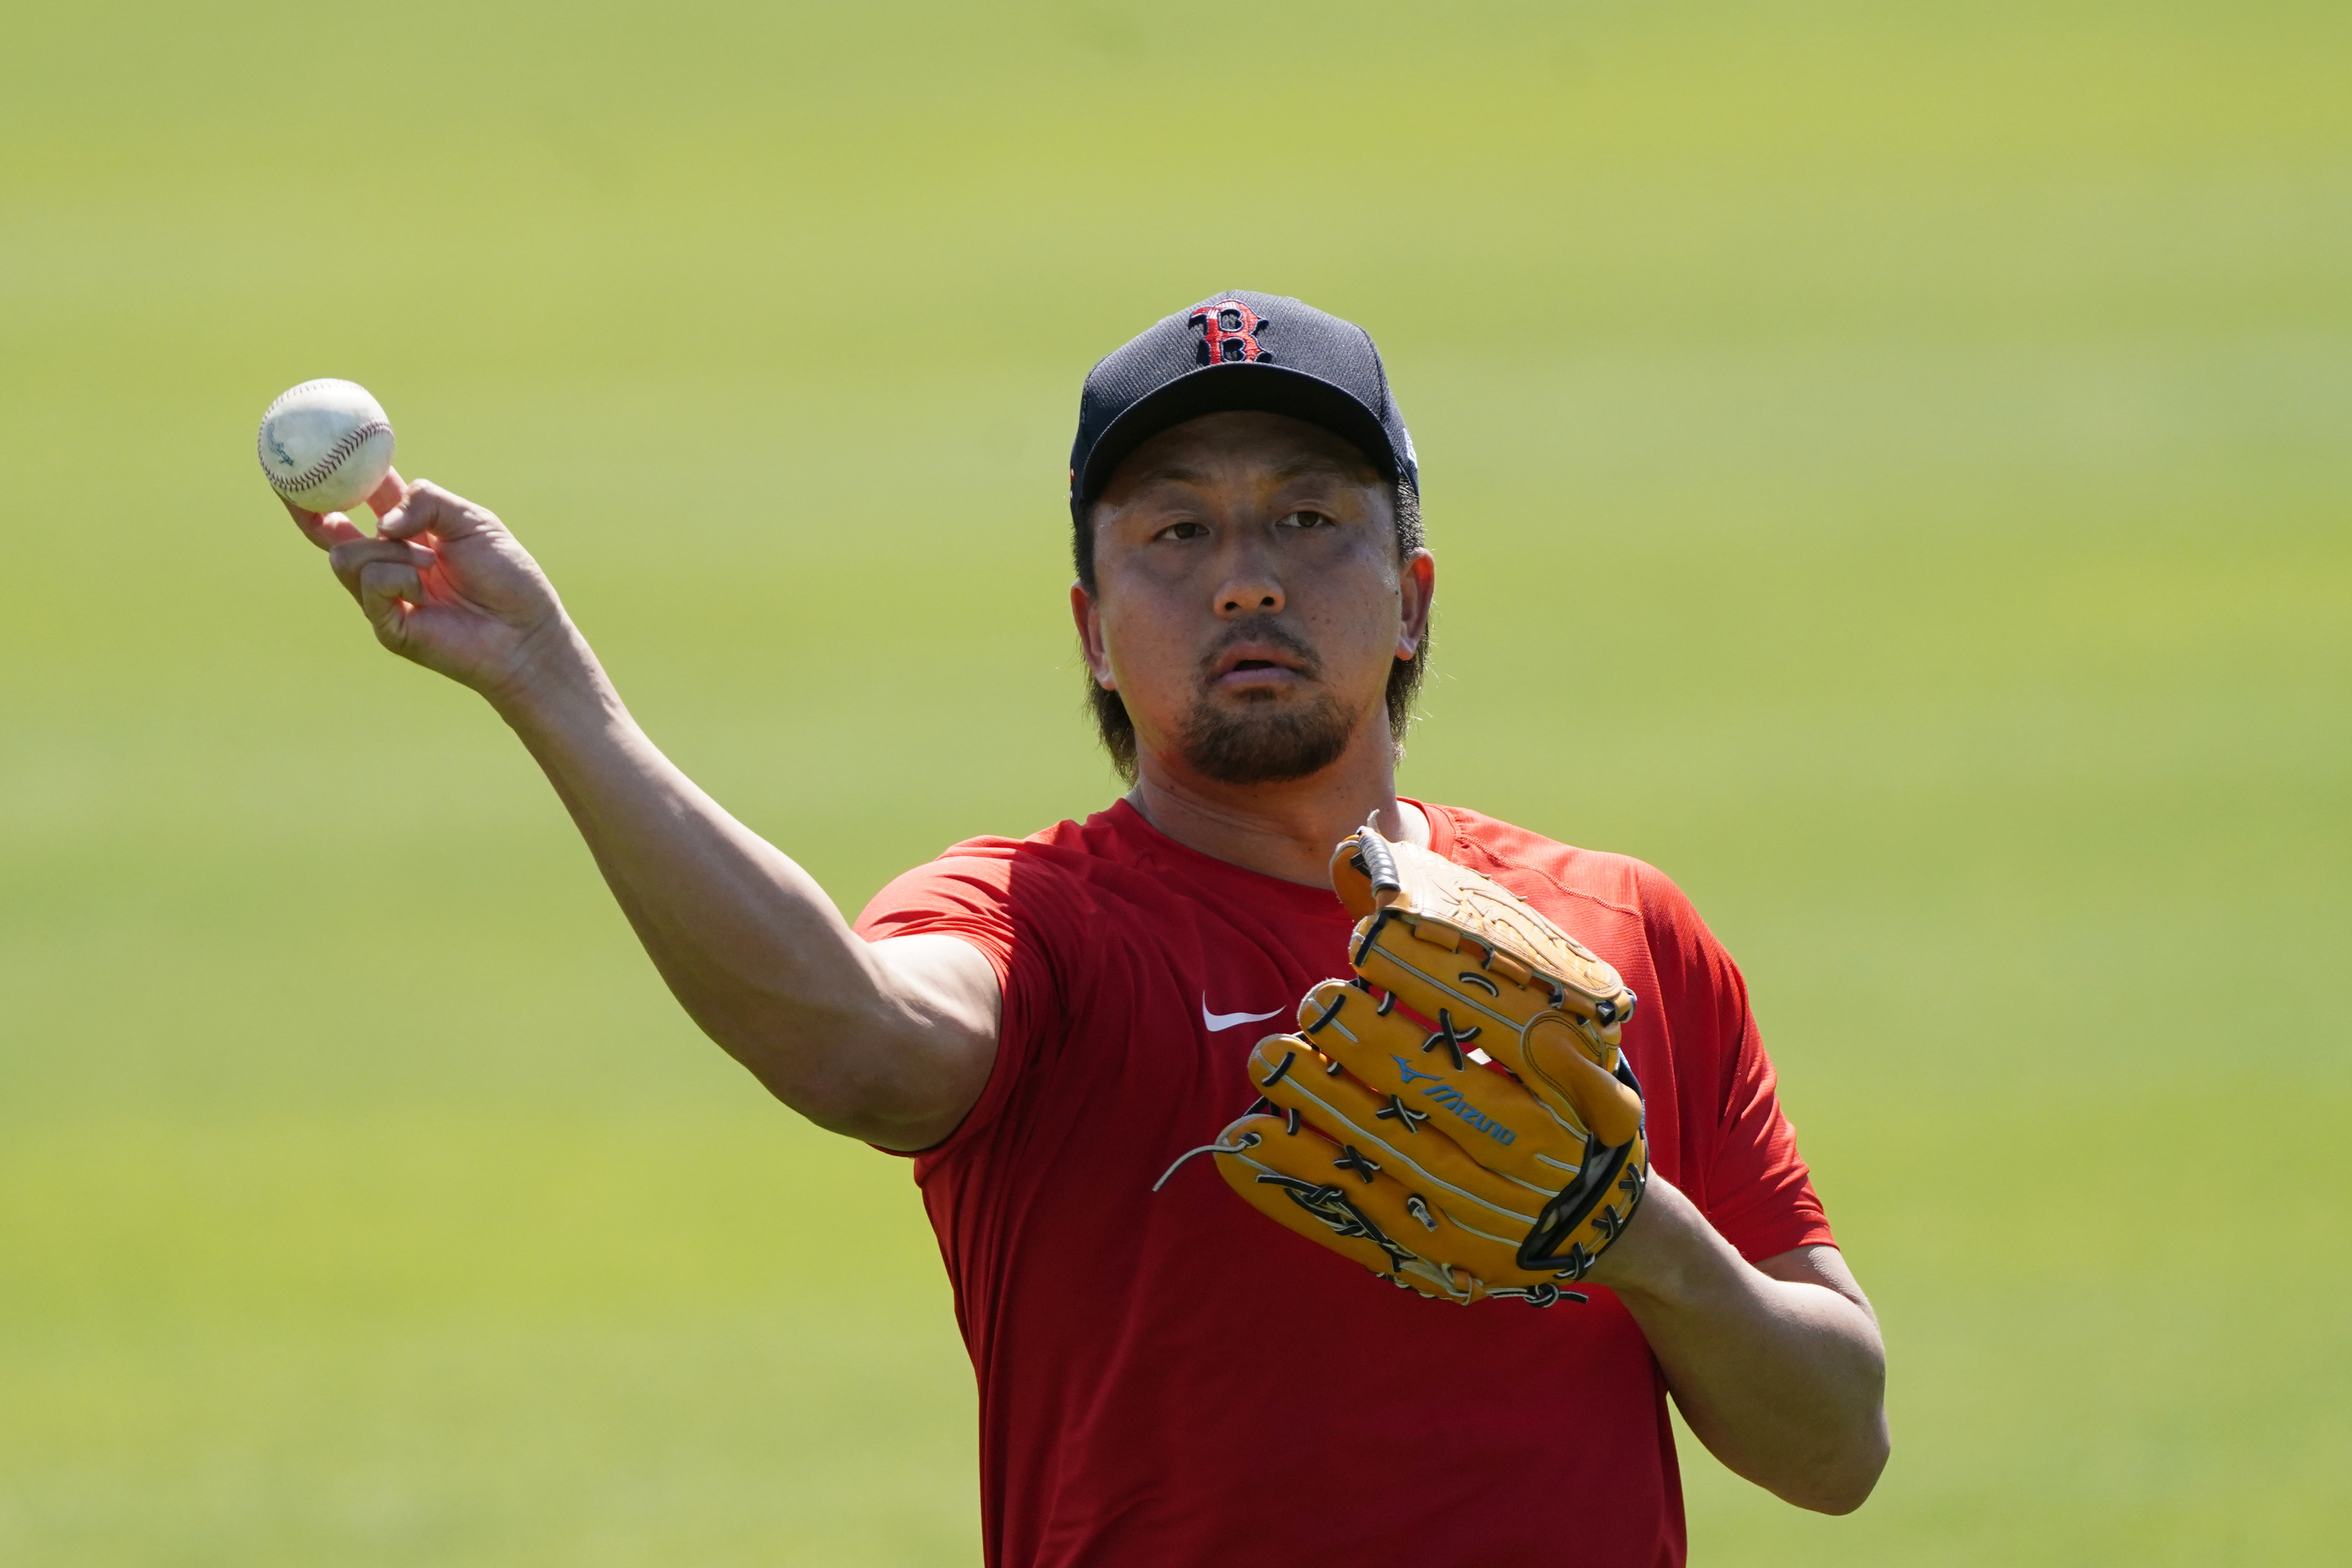 Hirokazu Sawamura signed by Red Sox